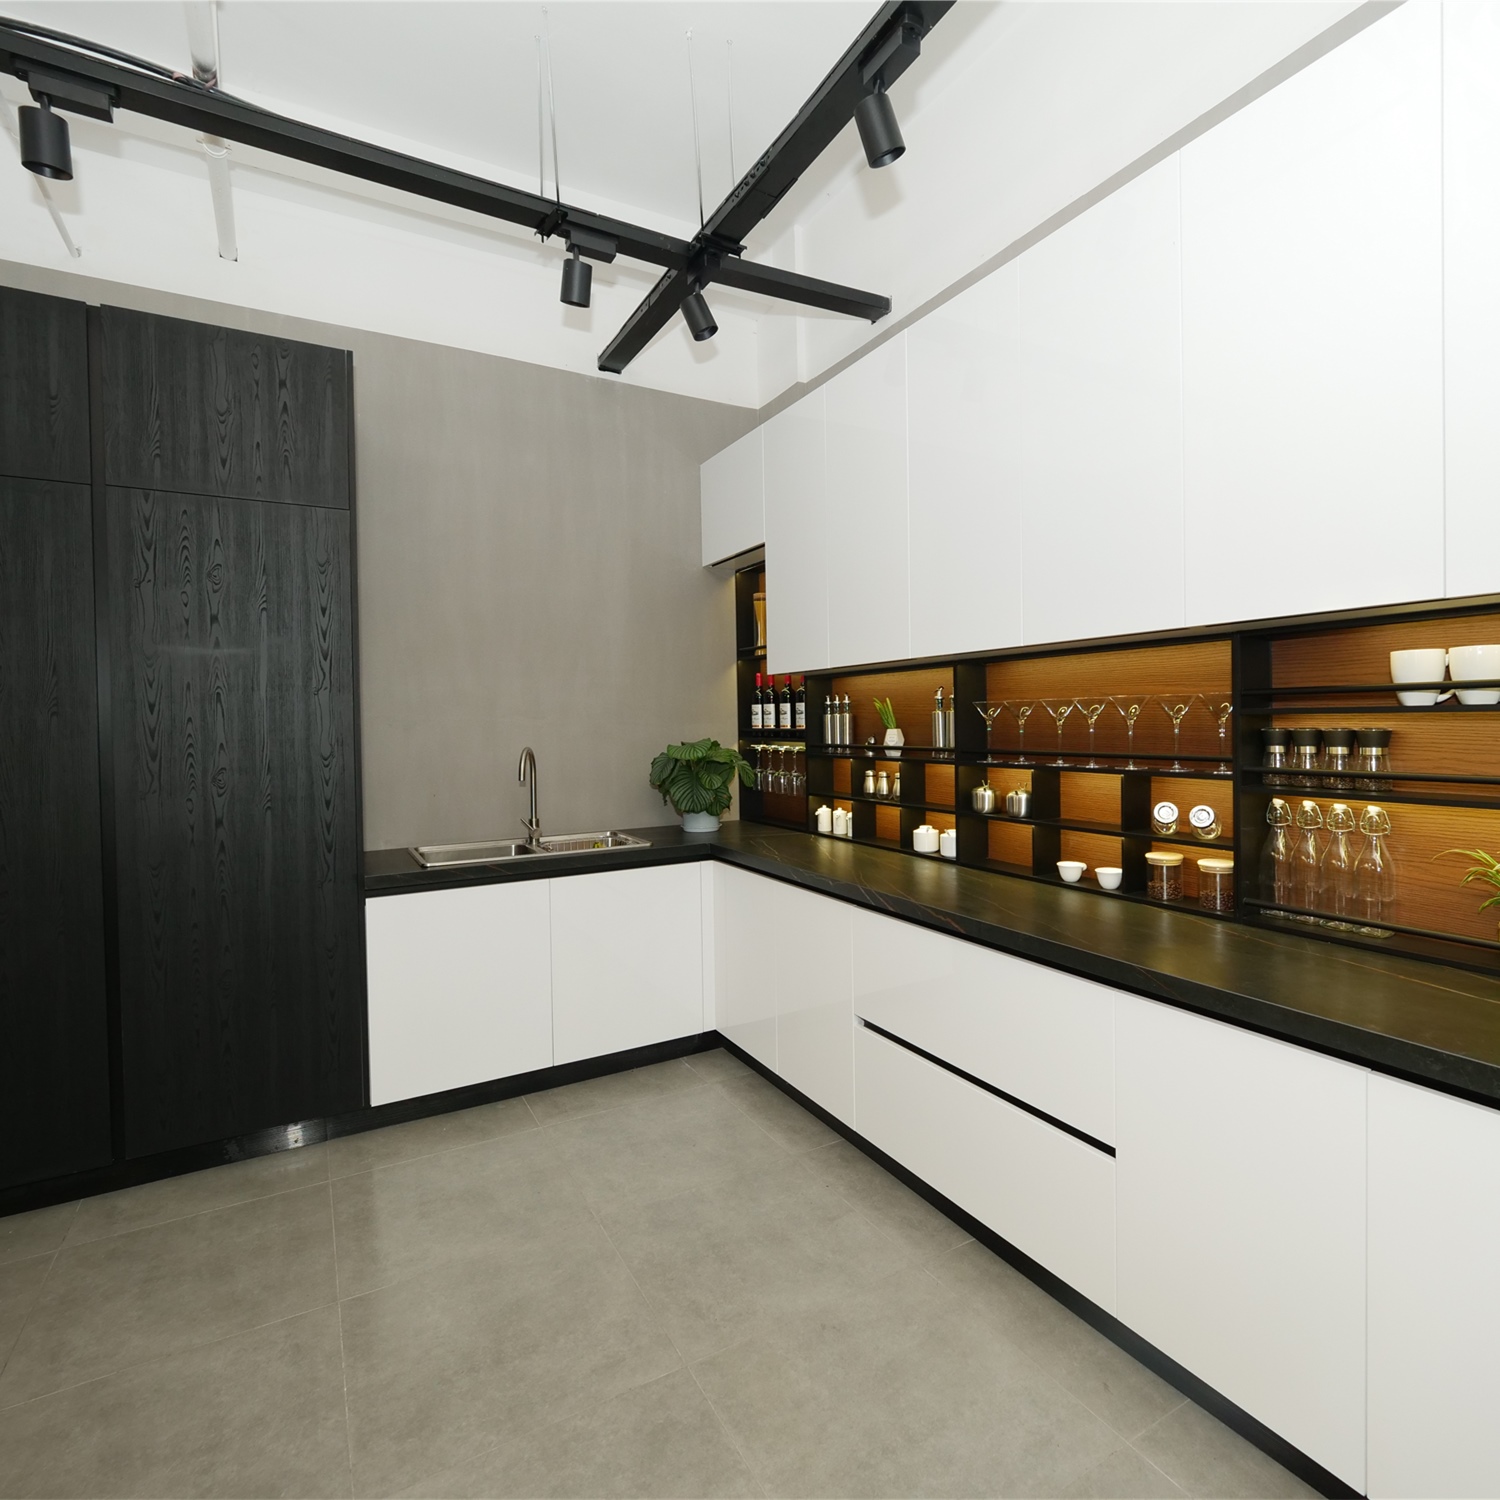 AisDecor custom white lacquer cabinets wholesale-2